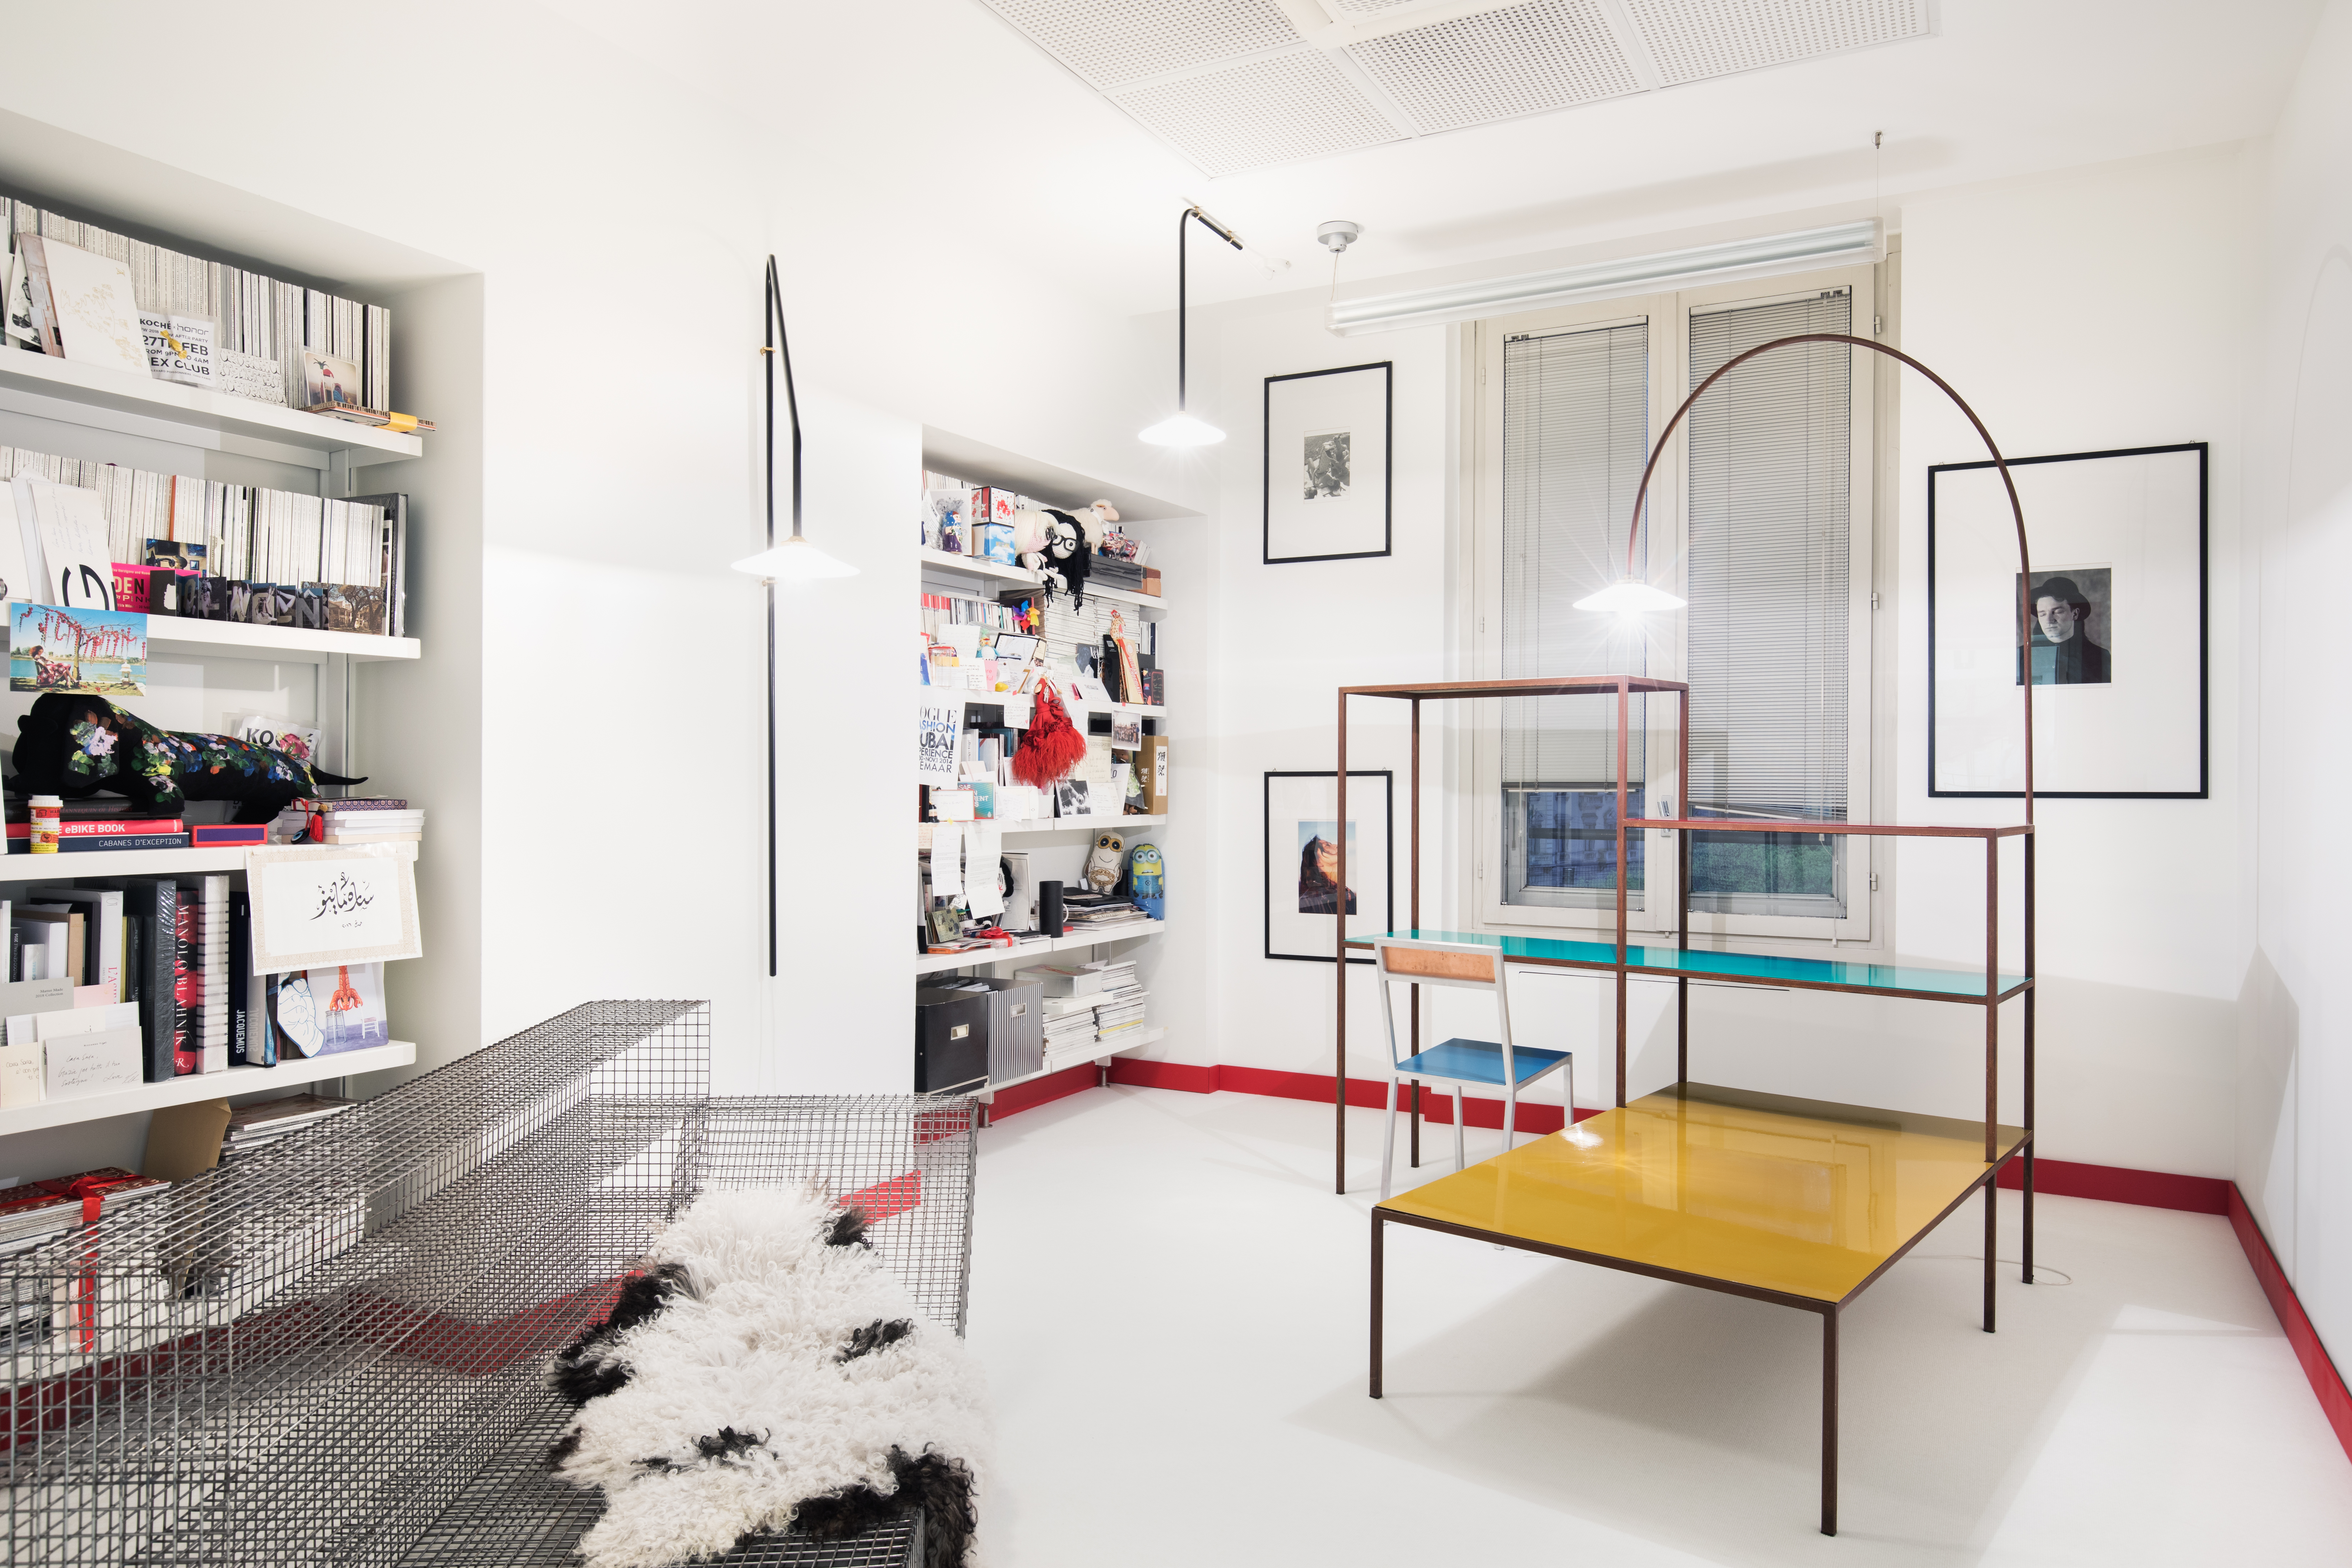 The "Vogue talents" office / Designed by Muller Van Severen / Life in Vogue / Design Week Milano 2018 Photo: VOGUE